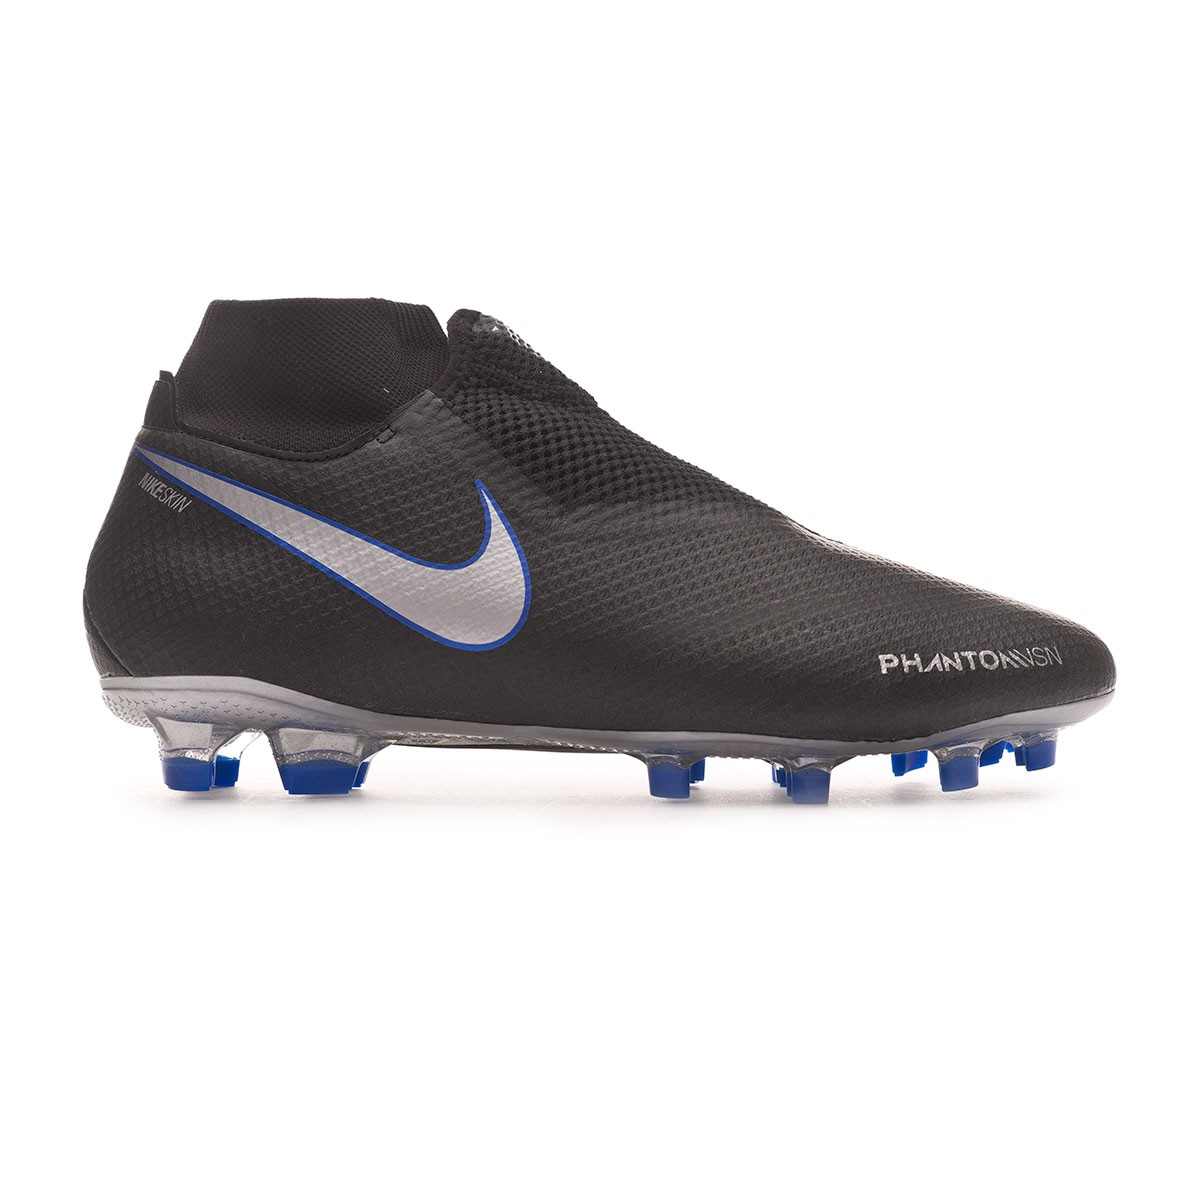 Football Boots Nike Phantom Vision Pro DF FG Black-Metallic silver-Racer  blue - Football store Fútbol Emotion